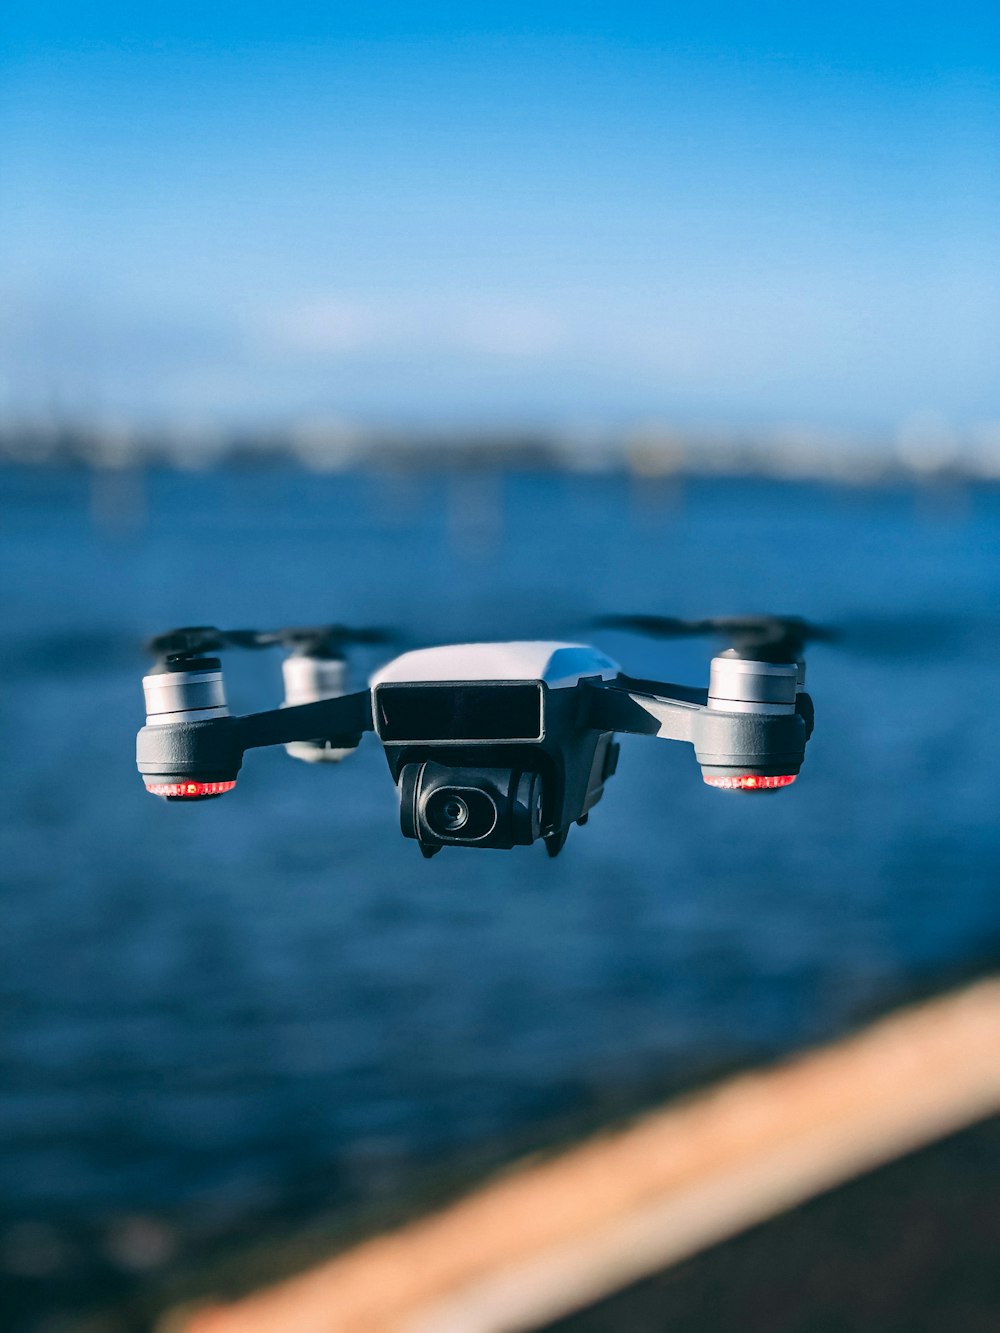 Fotografía time-lapse del dron DJI en vuelo